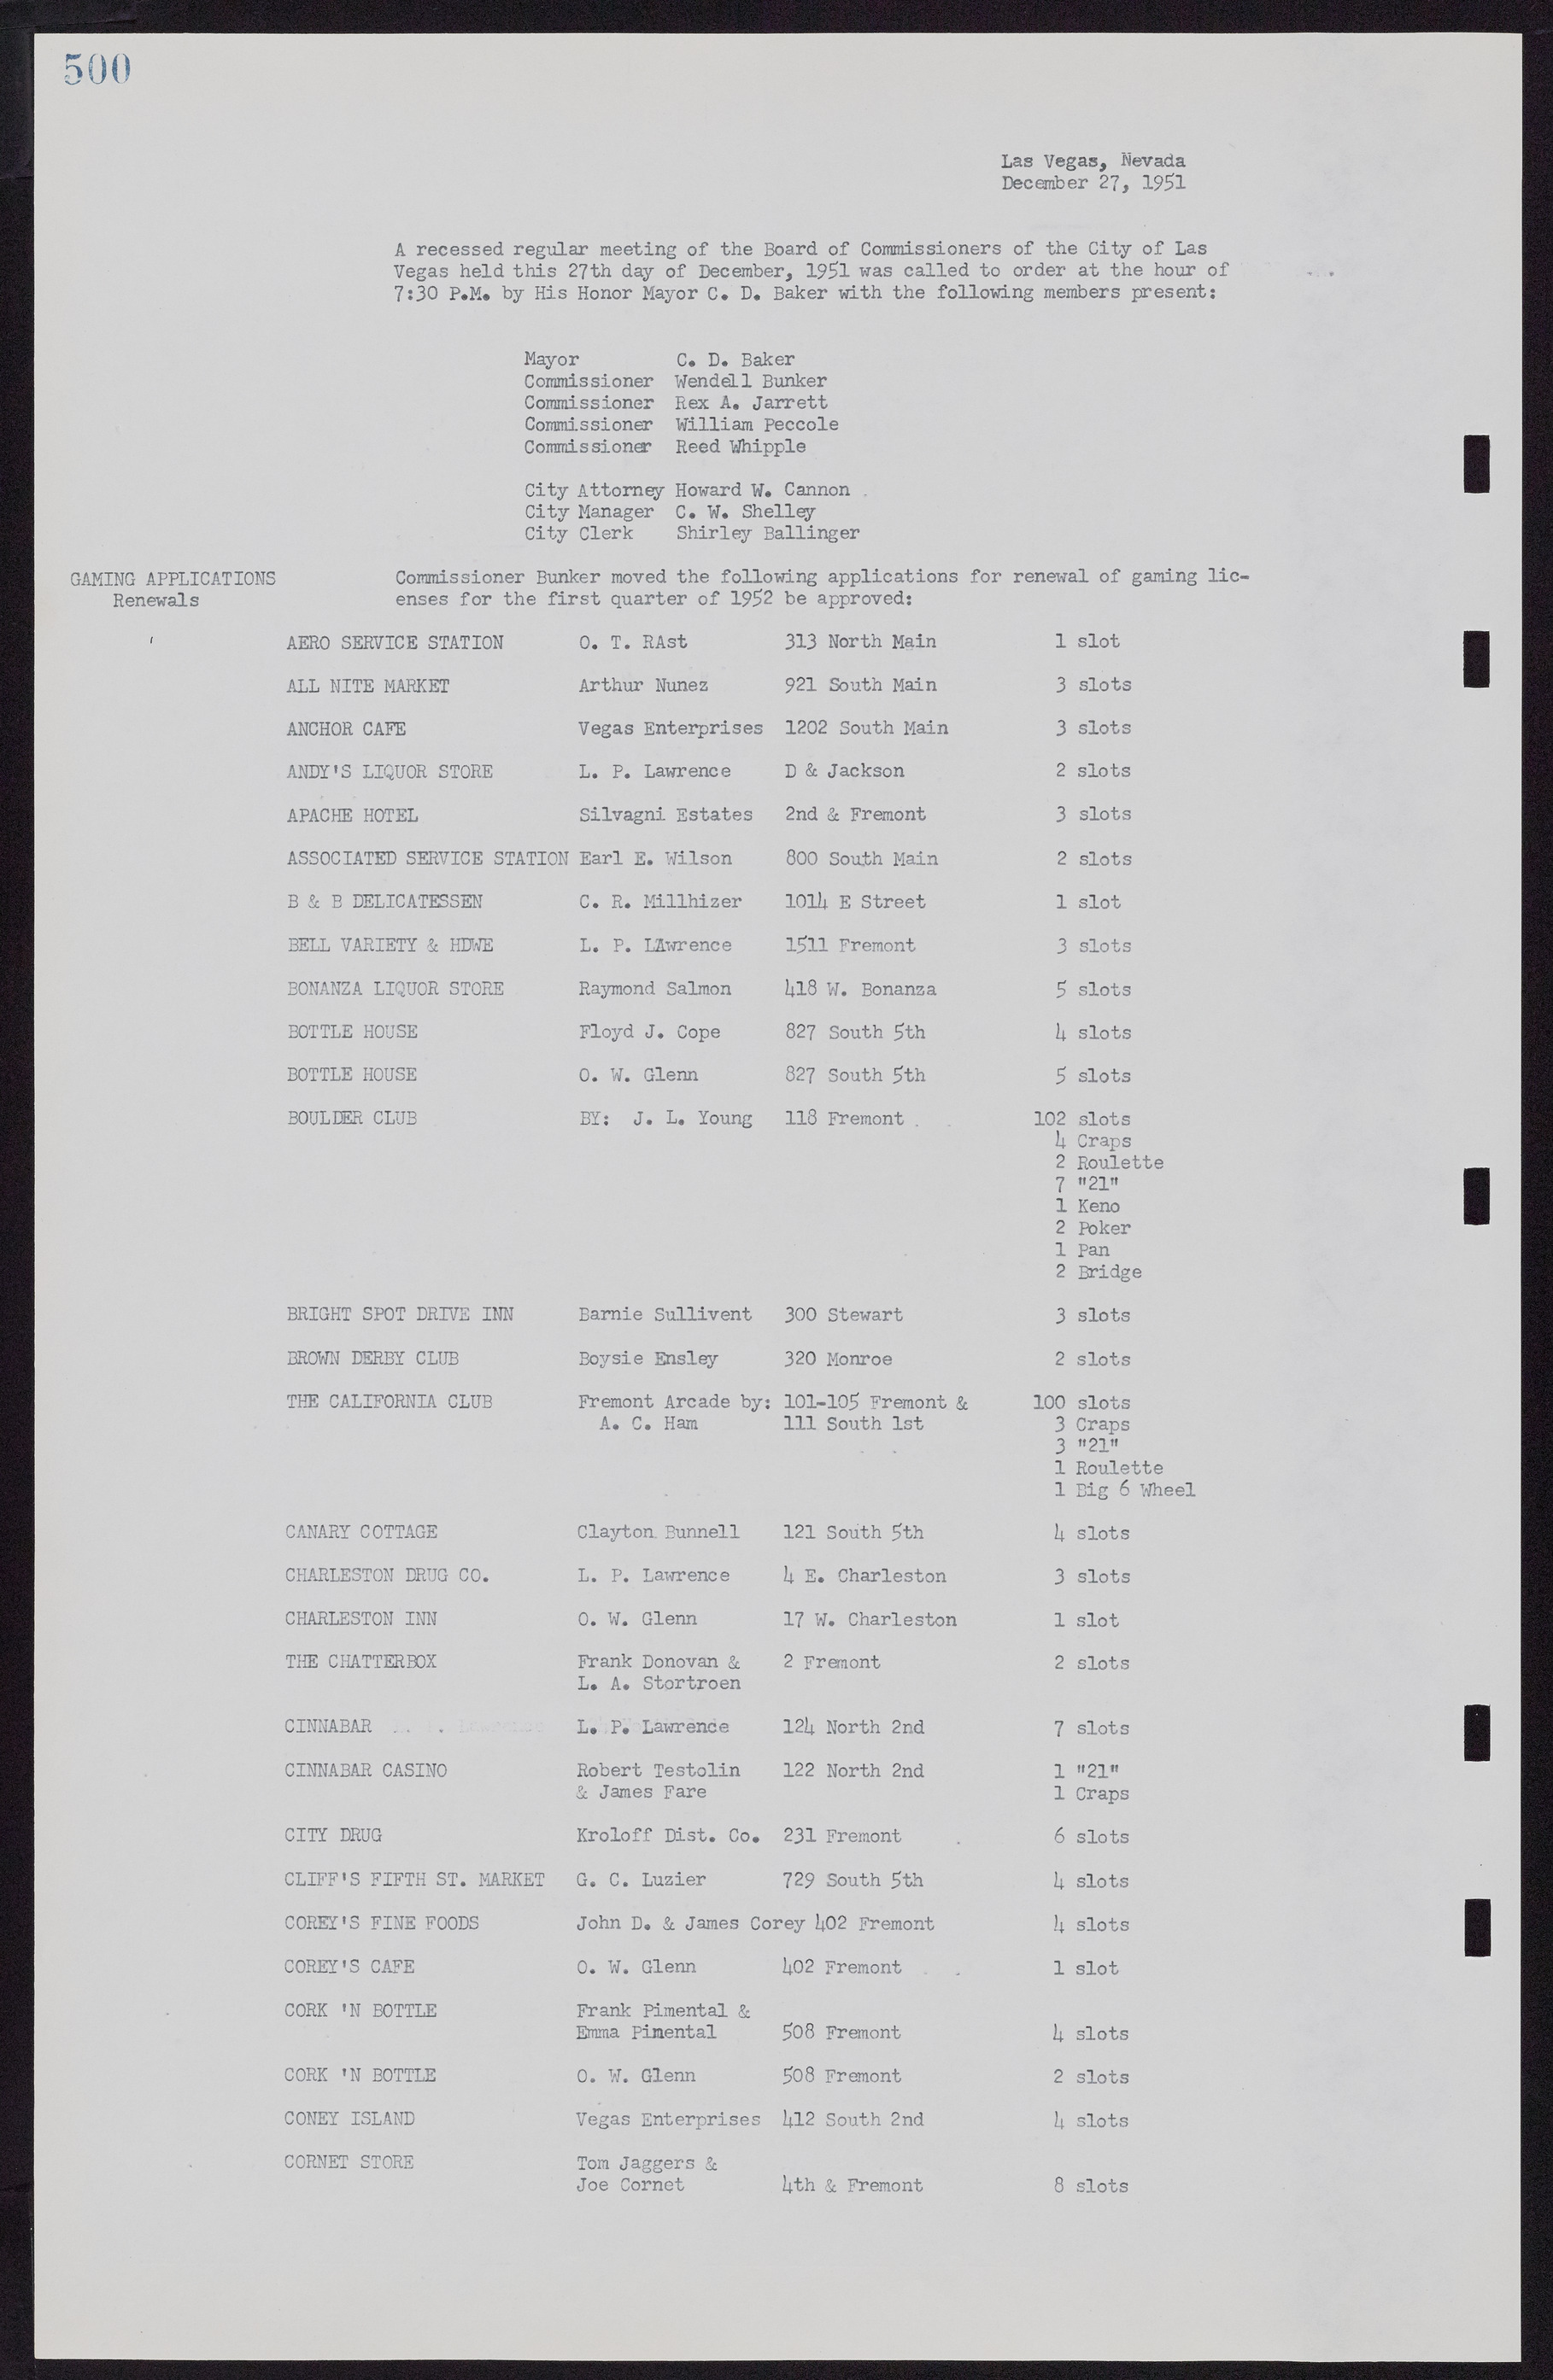 Las Vegas City Commission Minutes, November 7, 1949 to May 21, 1952, lvc000007-516